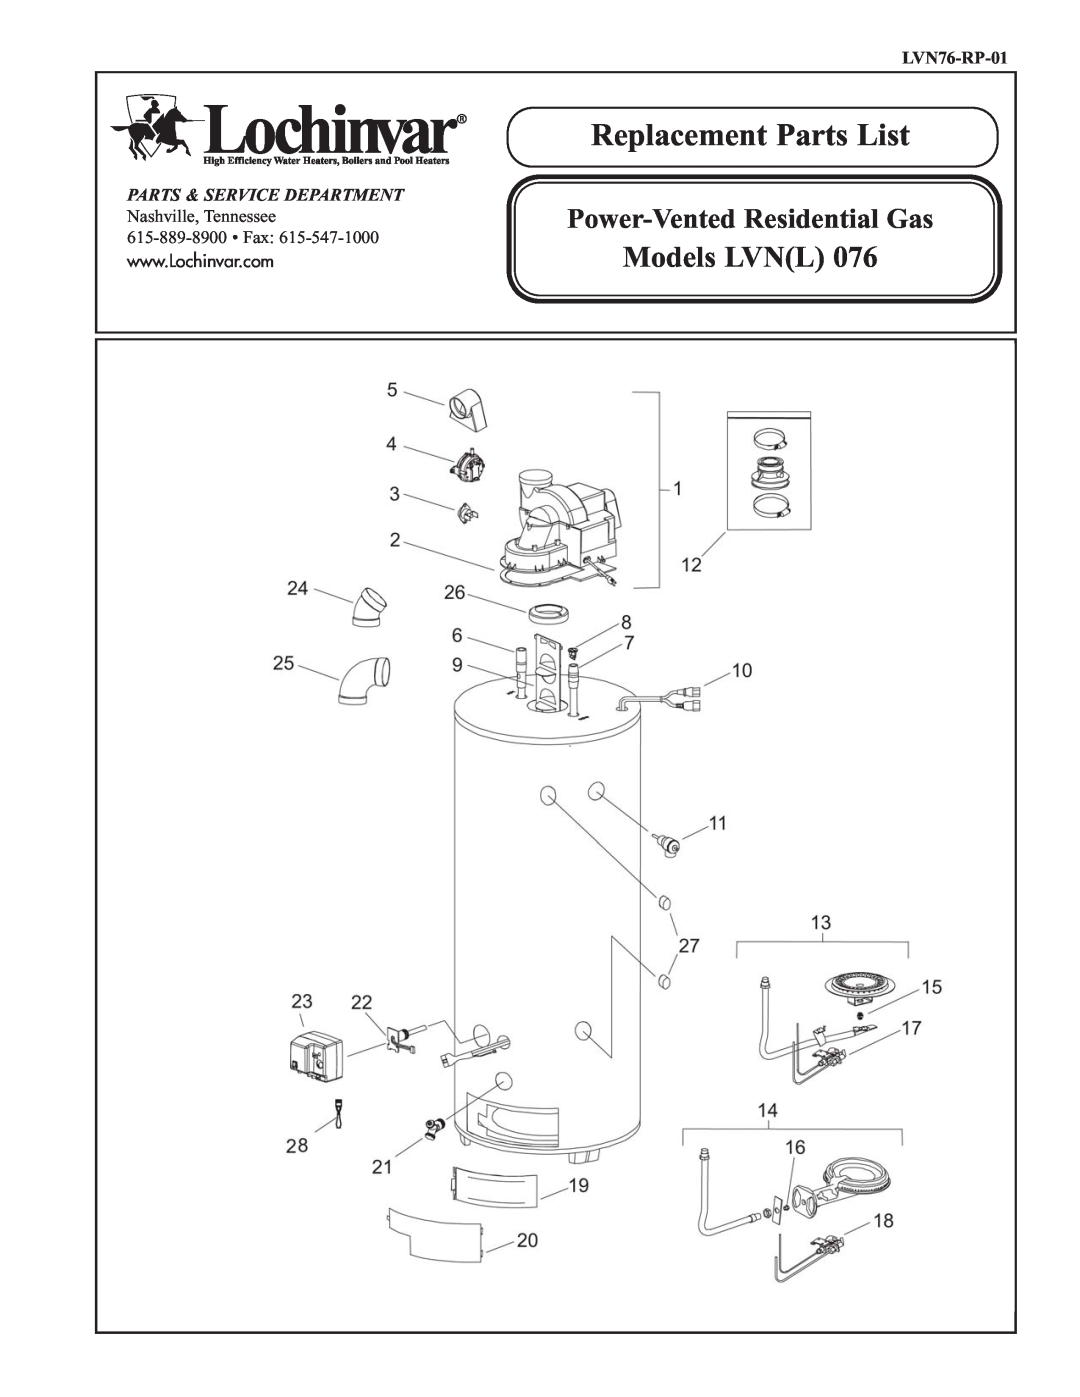 Lochinvar L) 076, LV(N manual Replacement Parts List, Models LVNL, Power-VentedResidential Gas, LVN76-RP-01 